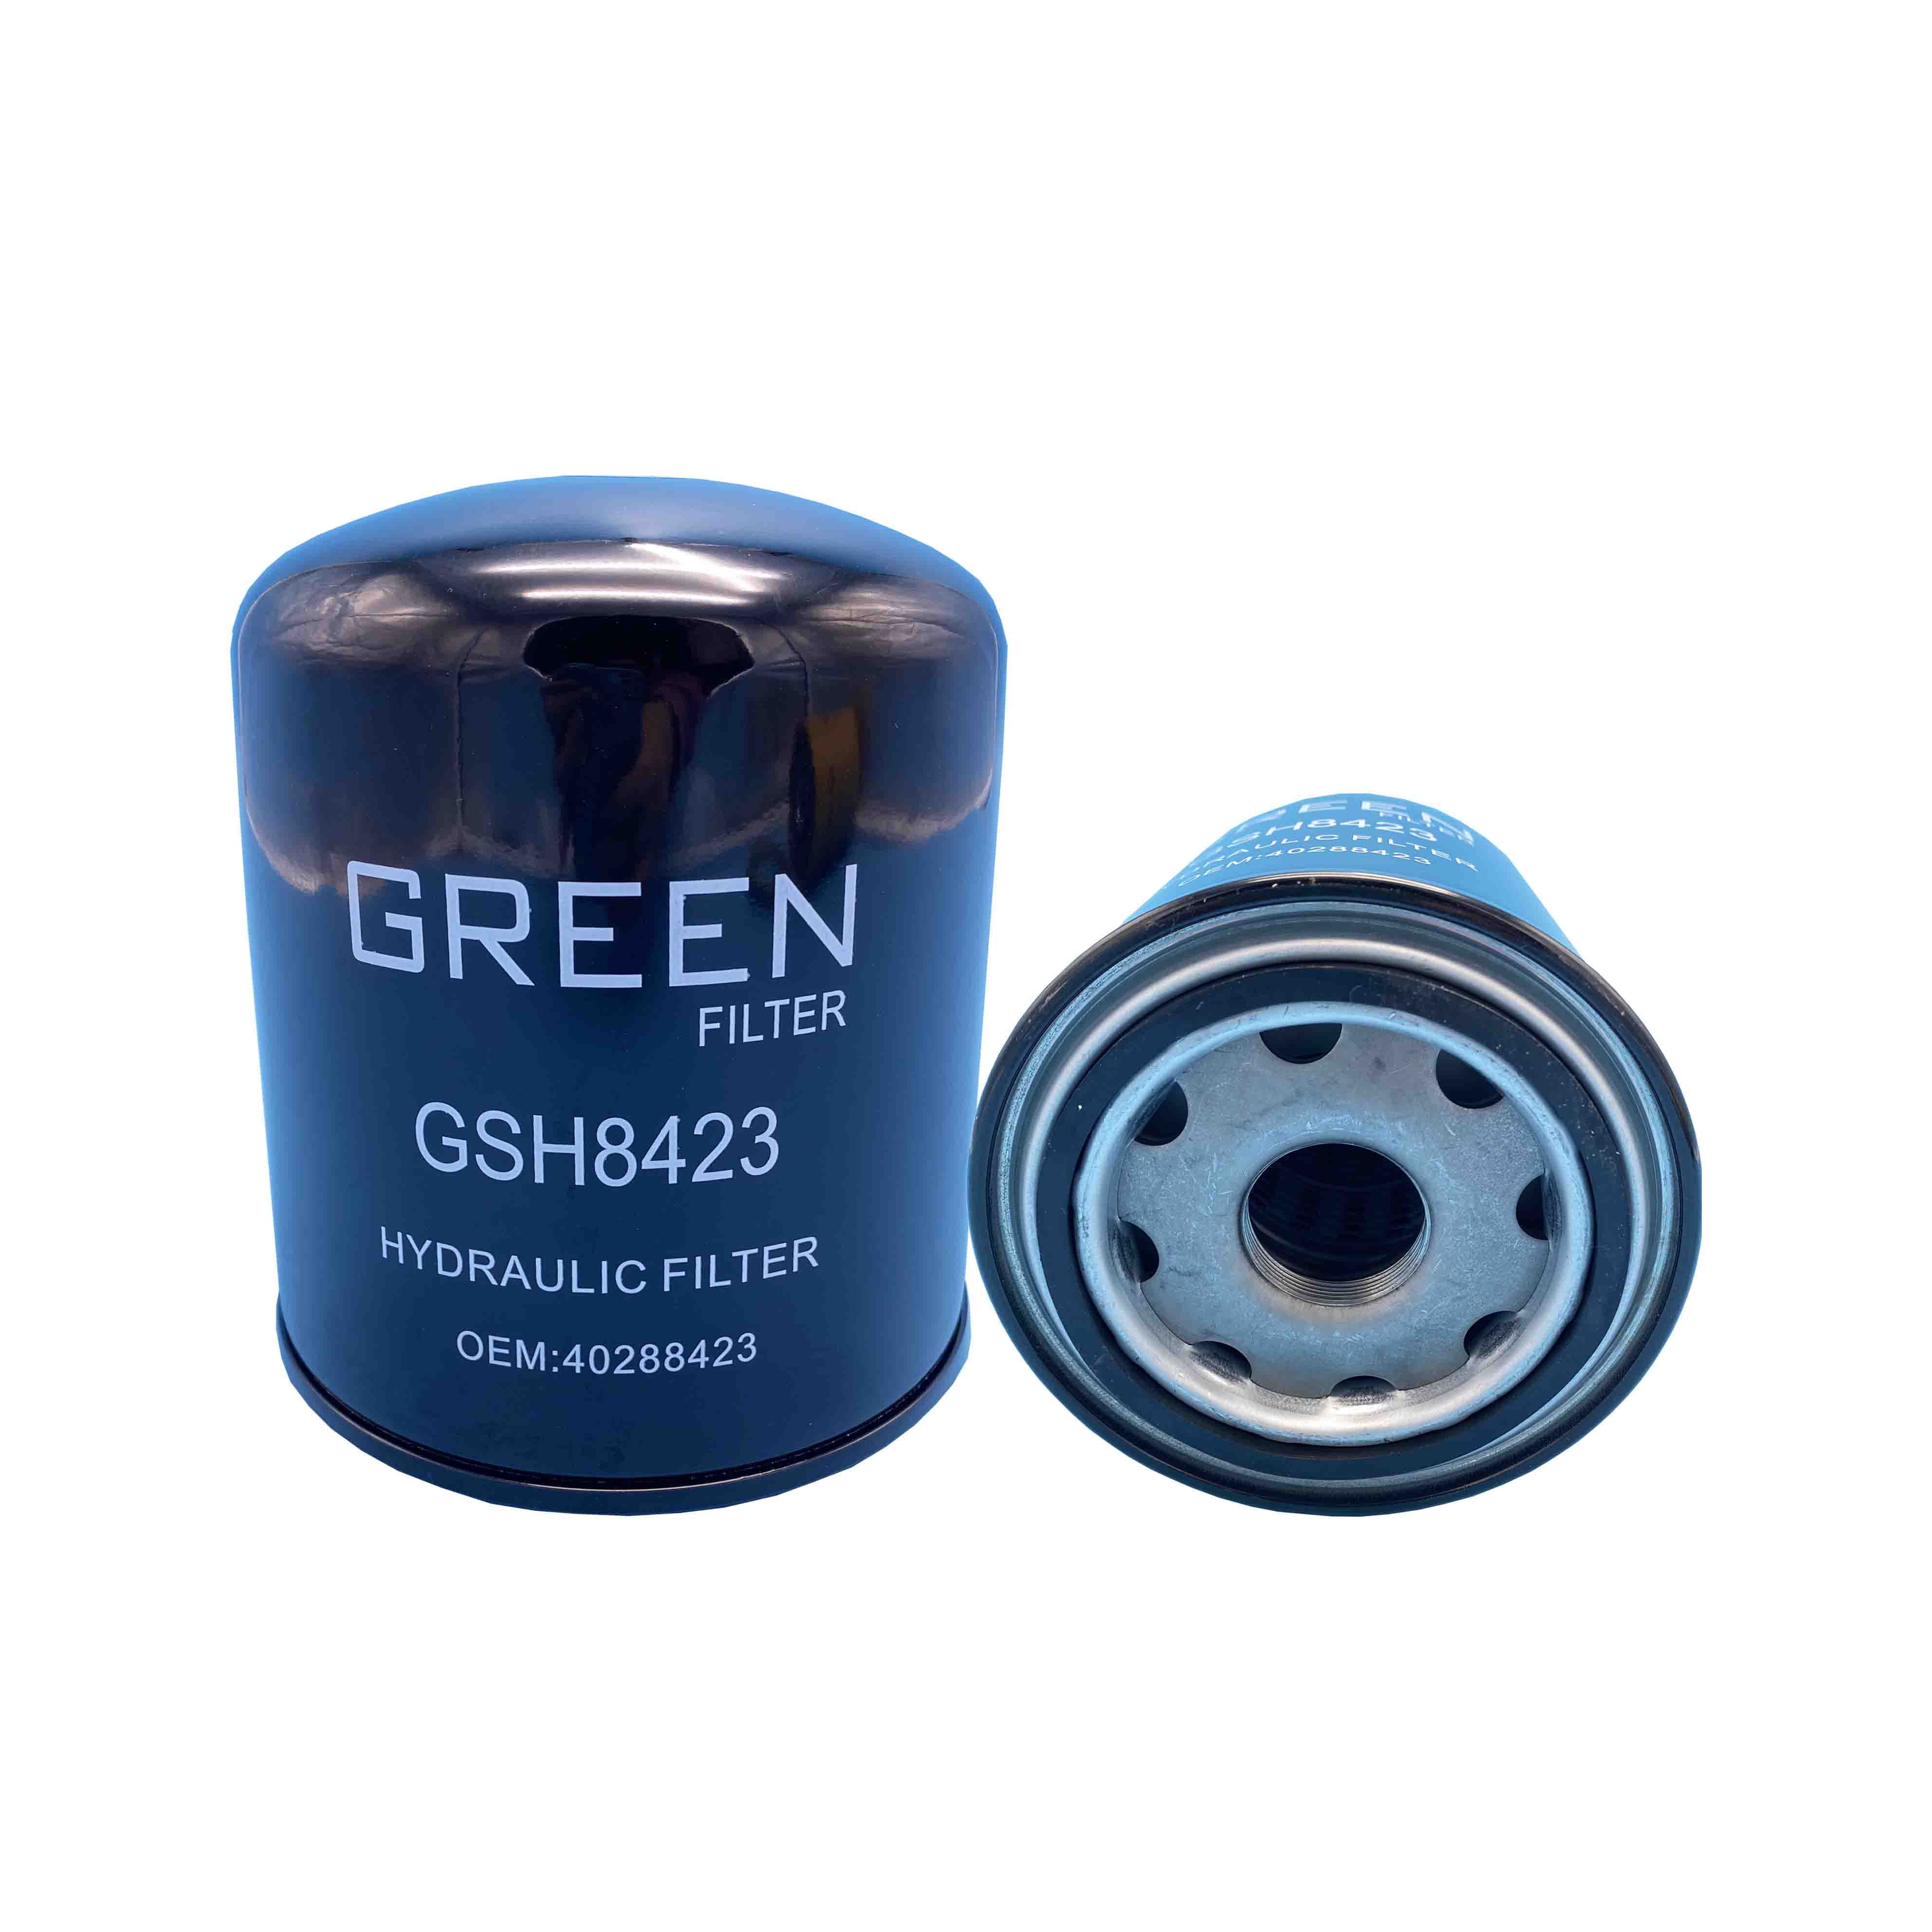 Hydraulic Filter Manufacturer GSH8423